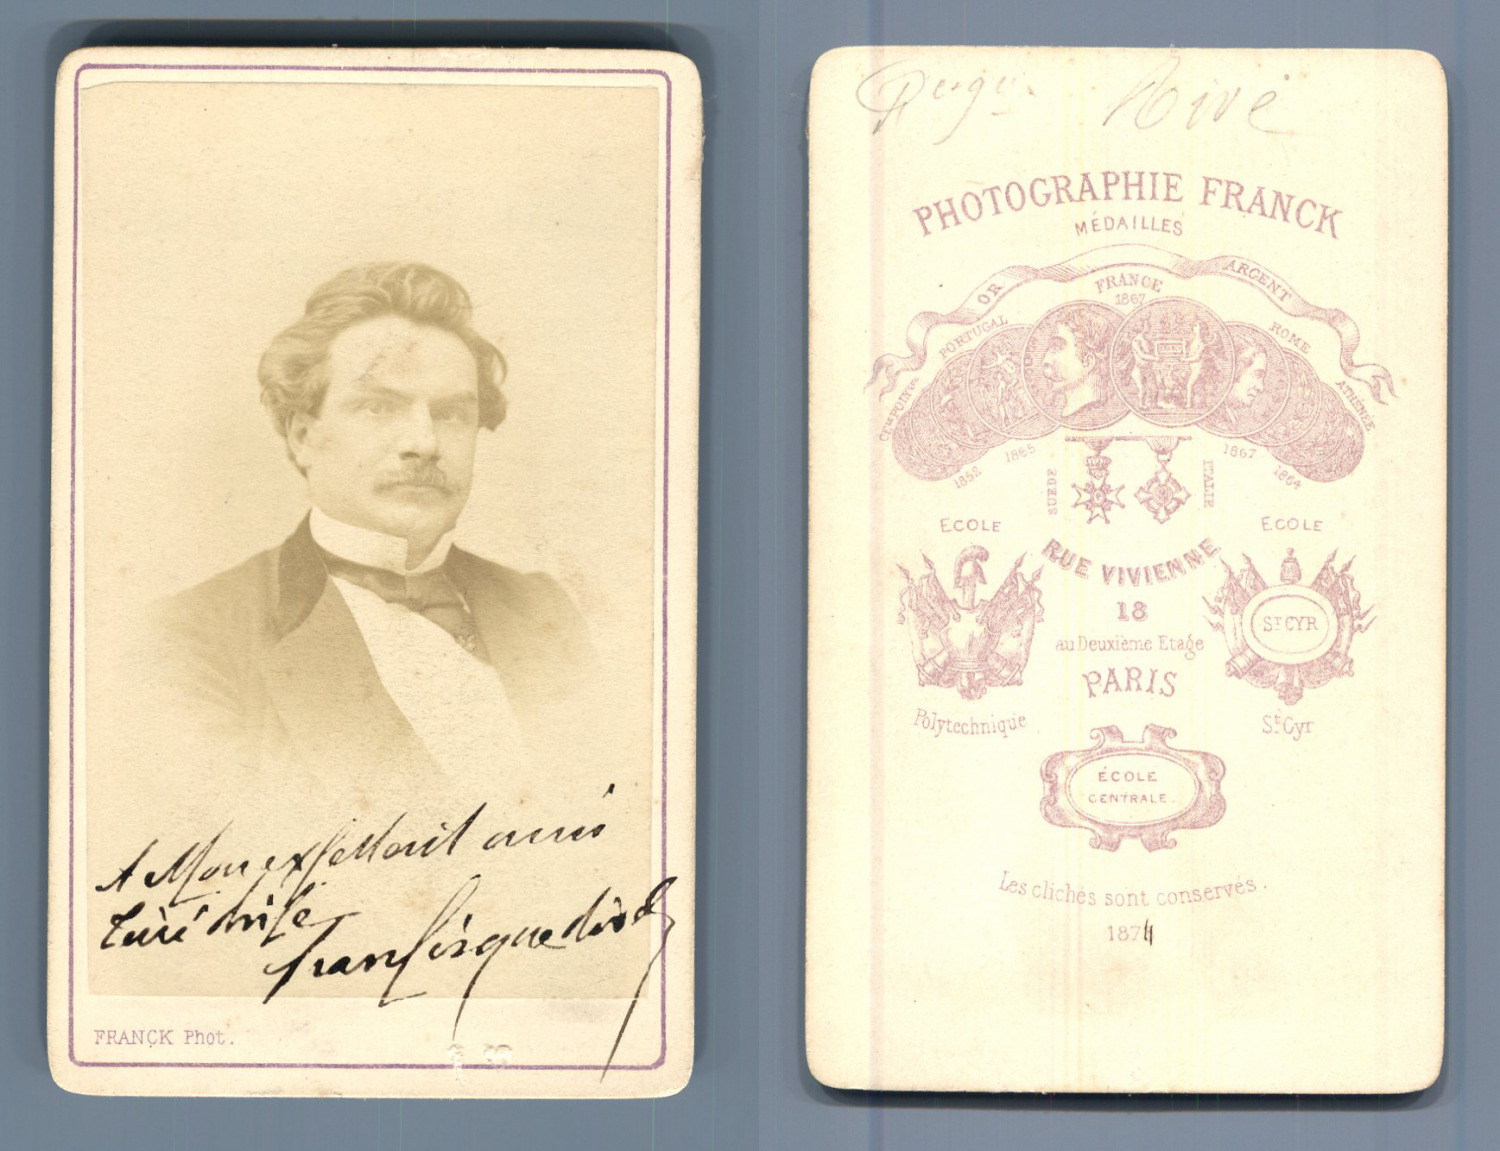 Franck, Paris, Shipping, to My Excellent Friend... Vintage CDV Albumen Print Print